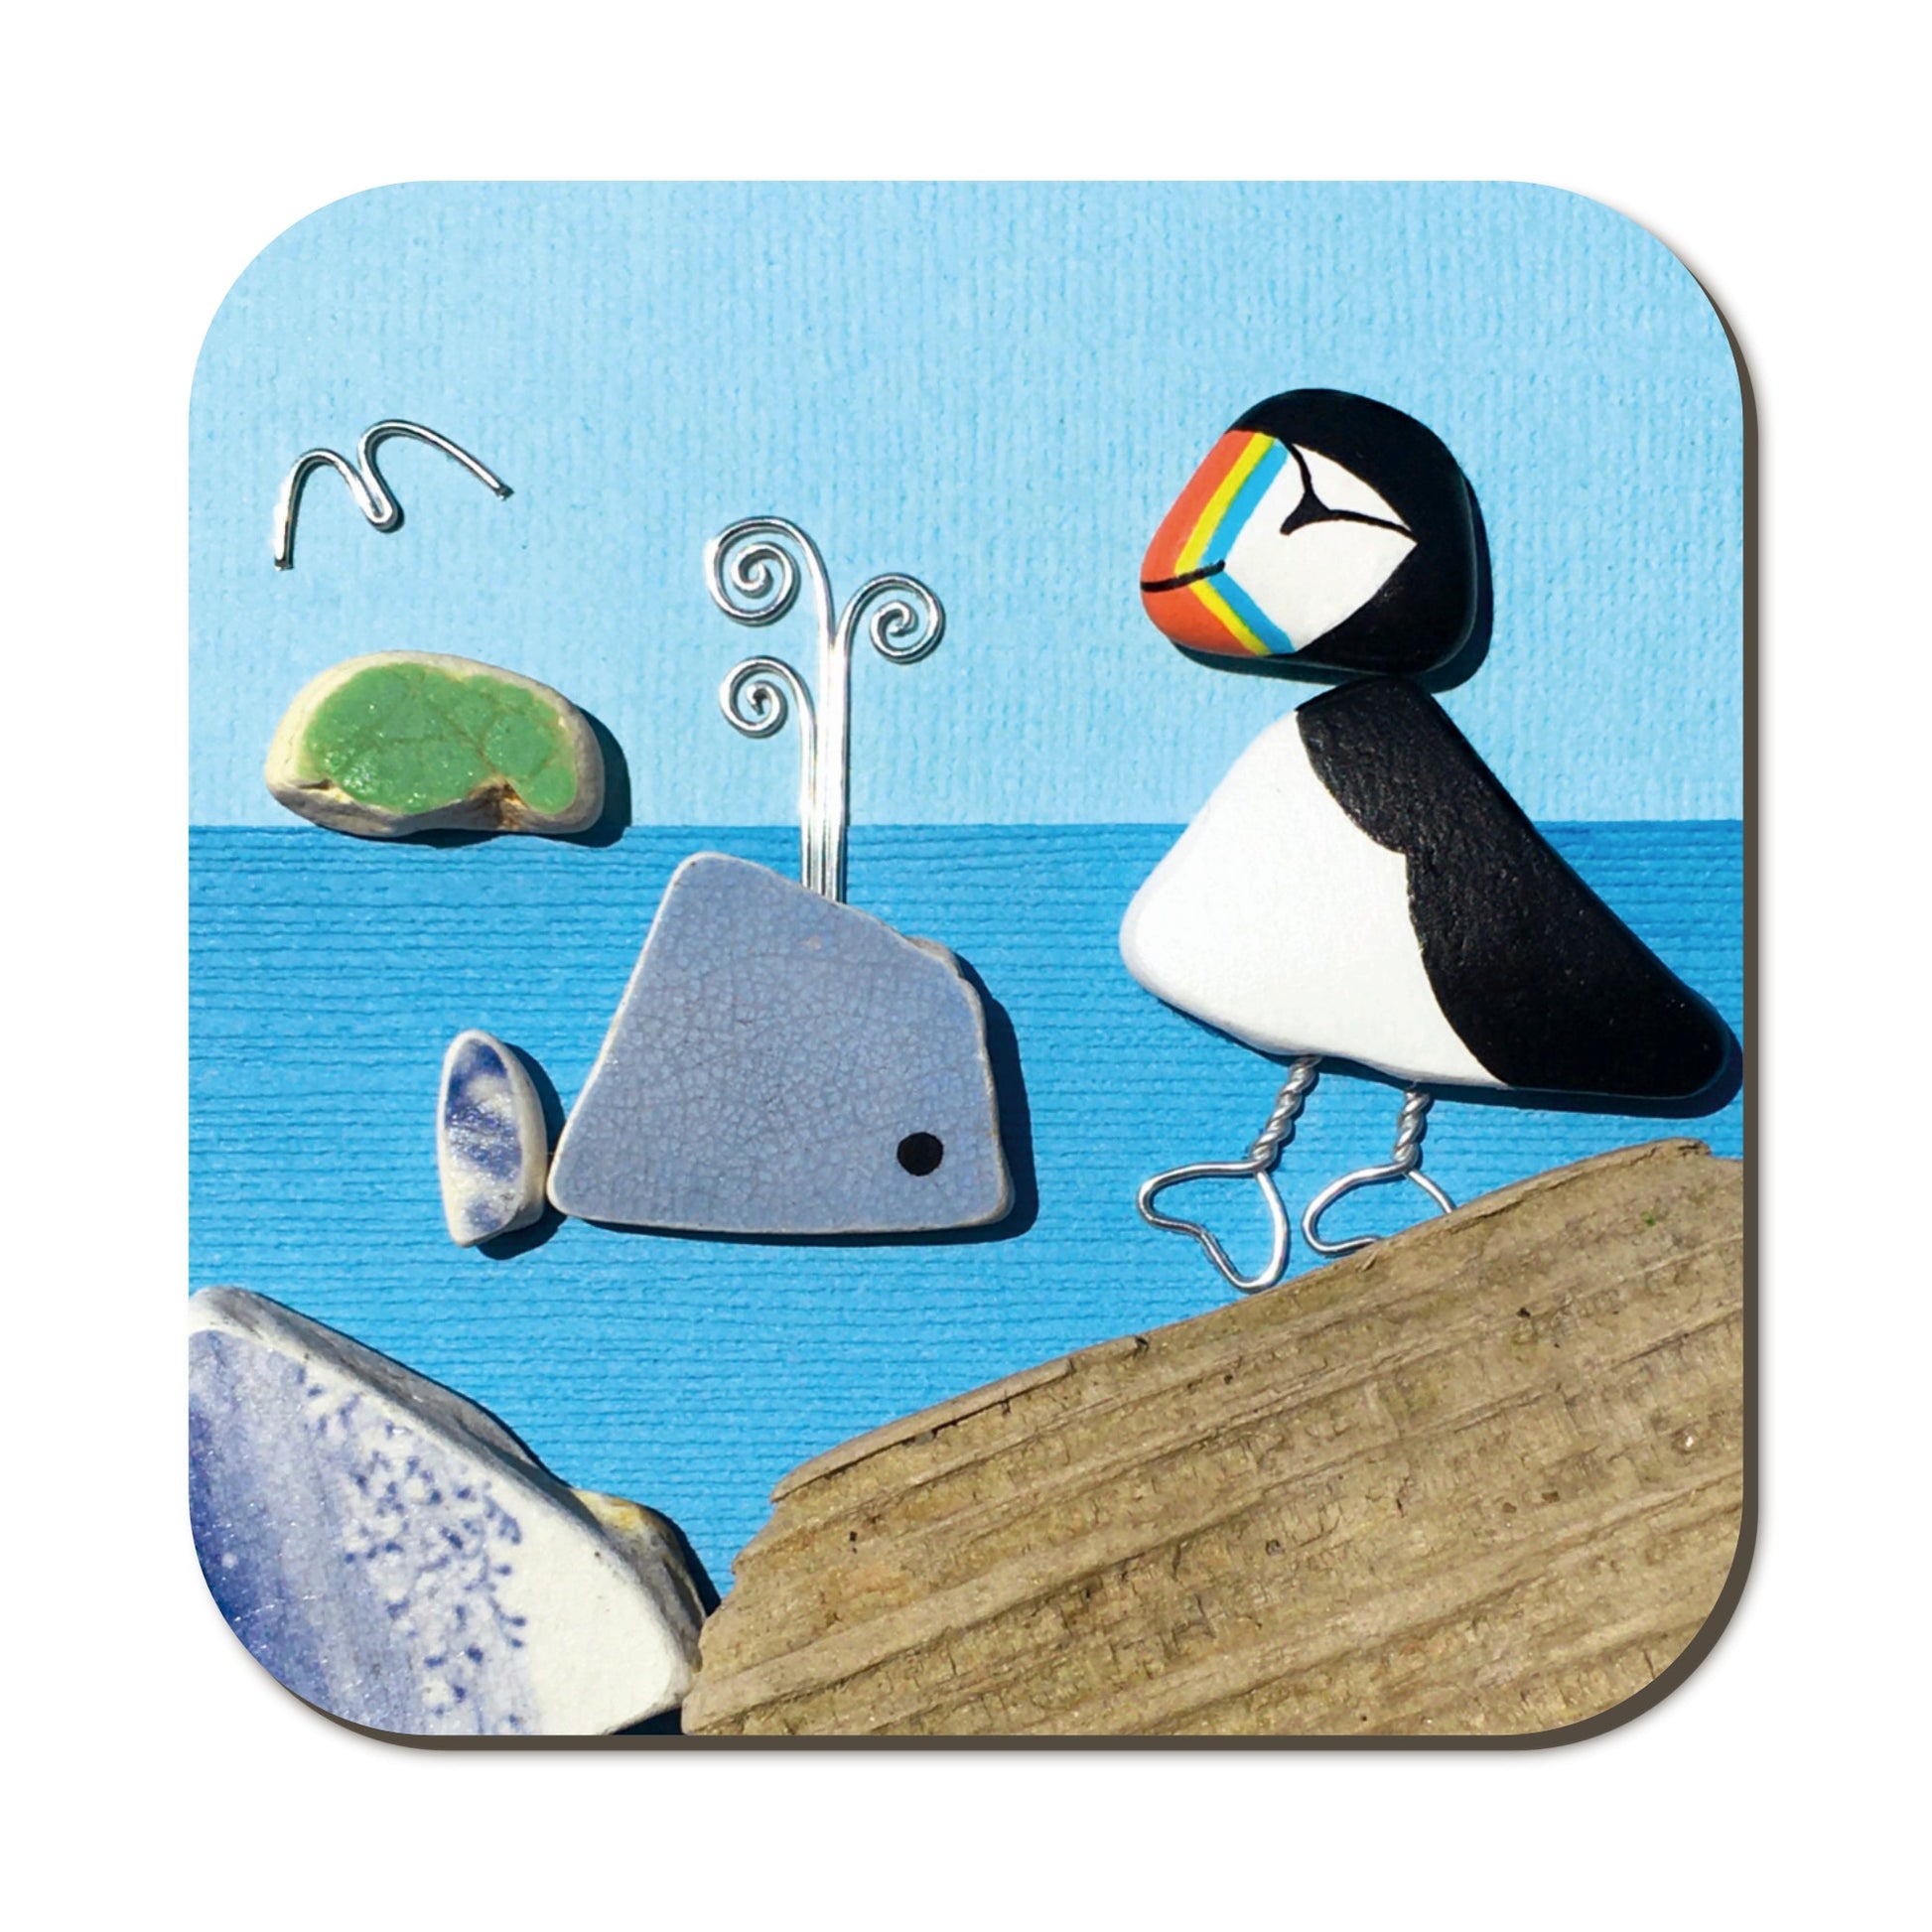 Coaster Set x 4 - Beach Pebble Art - Puffins, Seagulls, Seals, Highland Cows - East Neuk Beach Crafts